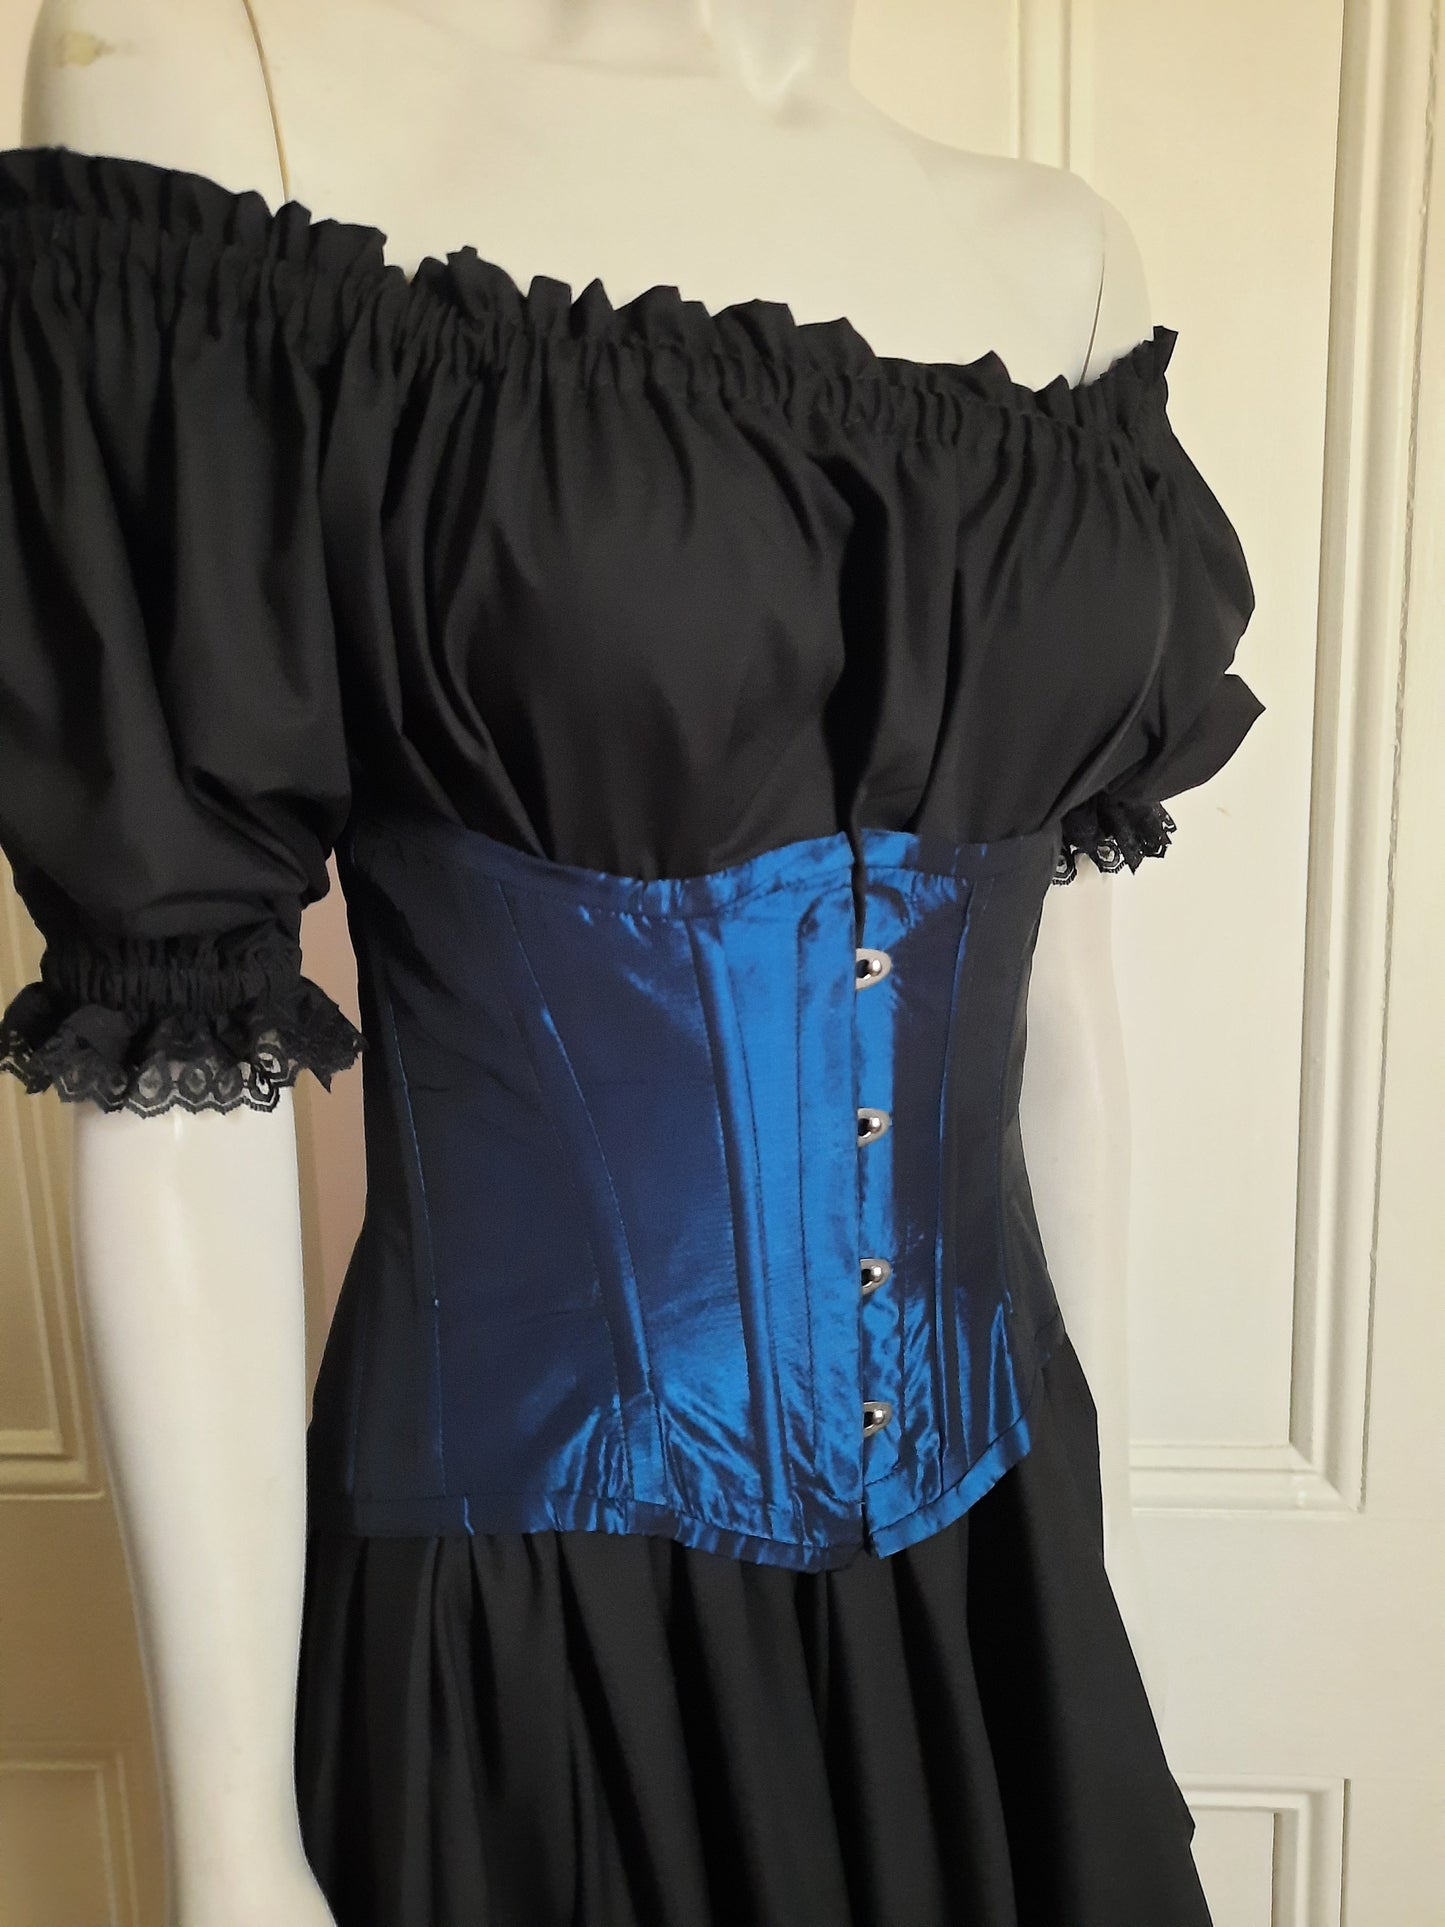 Blue Iridescent taffeta underbust corset